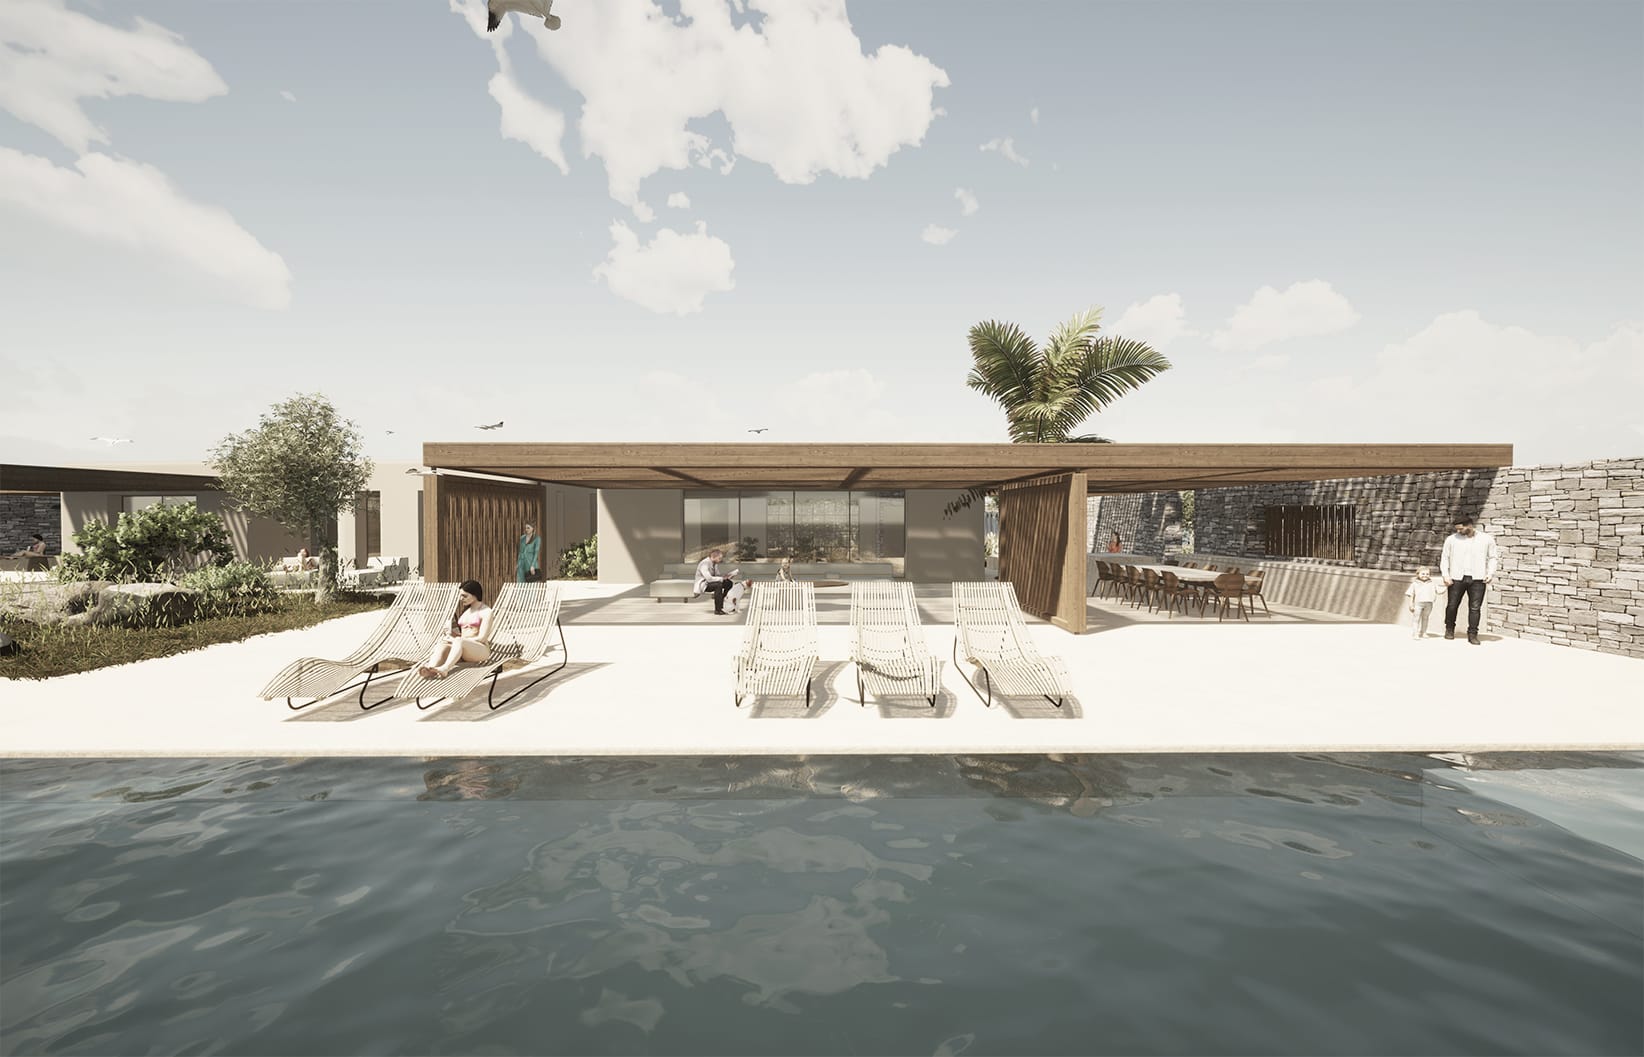 Evripiotis Architects--House in Limnes #1, Paros Island